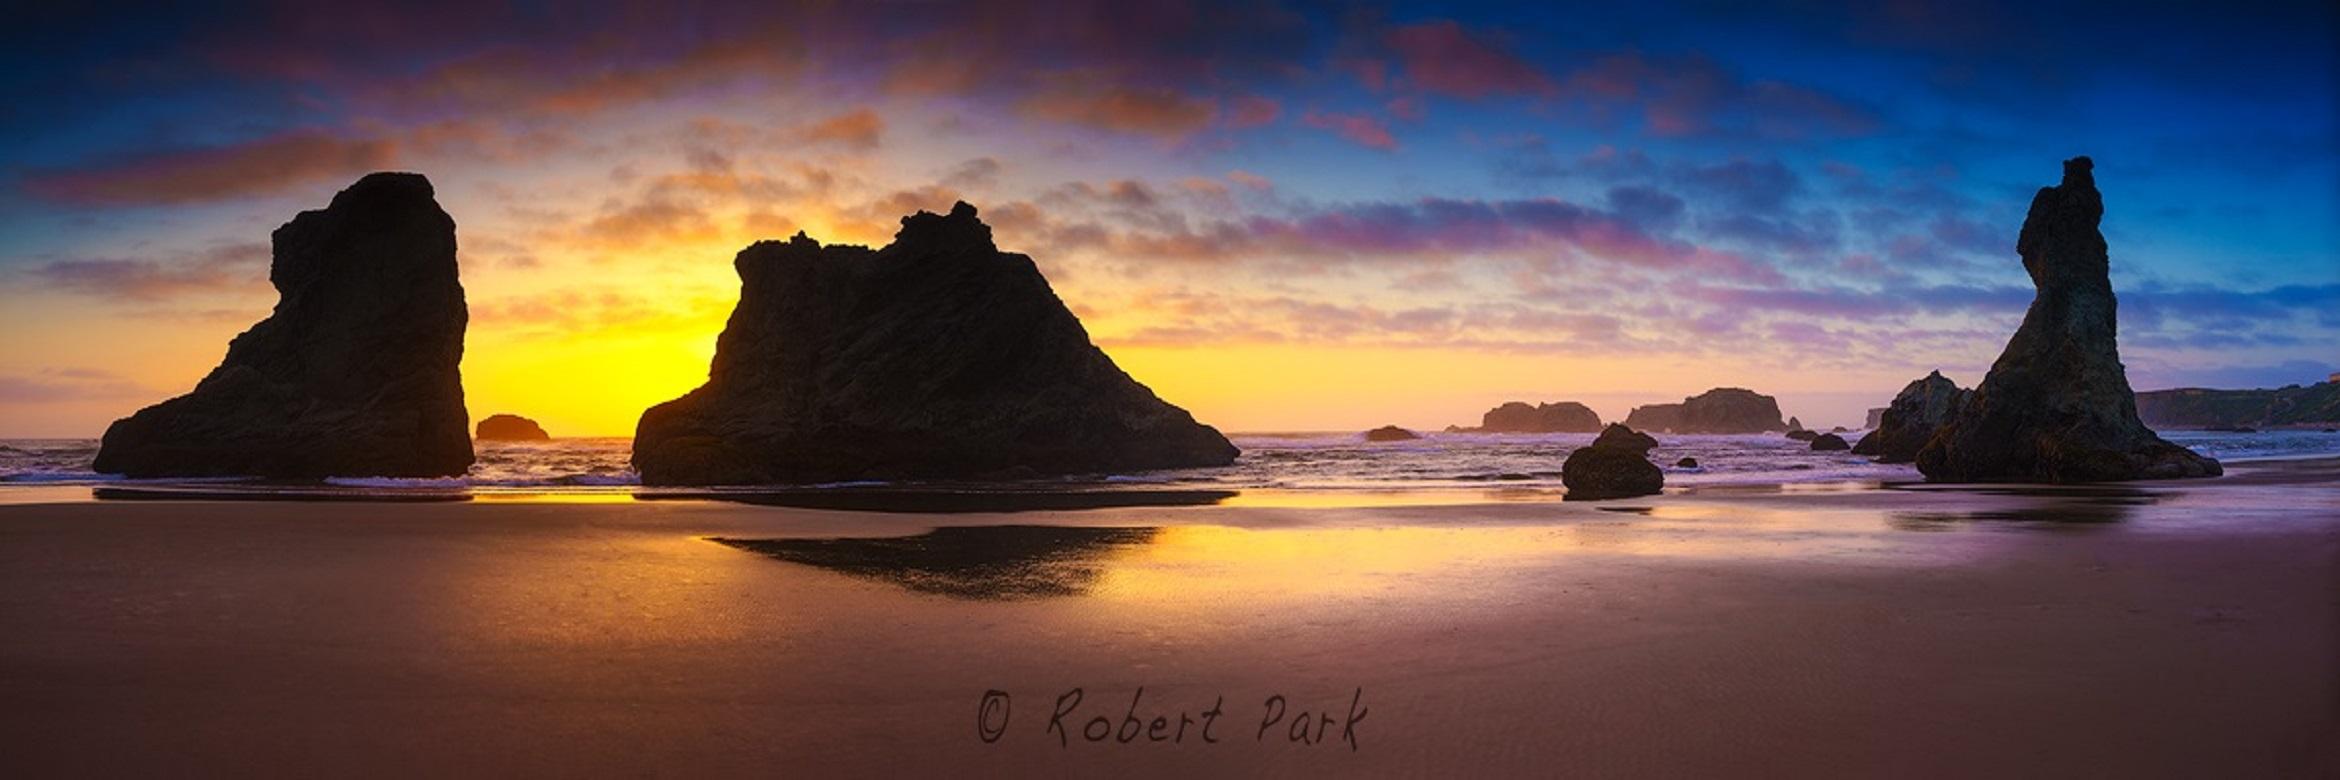 Robert Park Landscape Print - Lands End - Oregon Coast - Acrylic Photograph - Limited Edition of 100